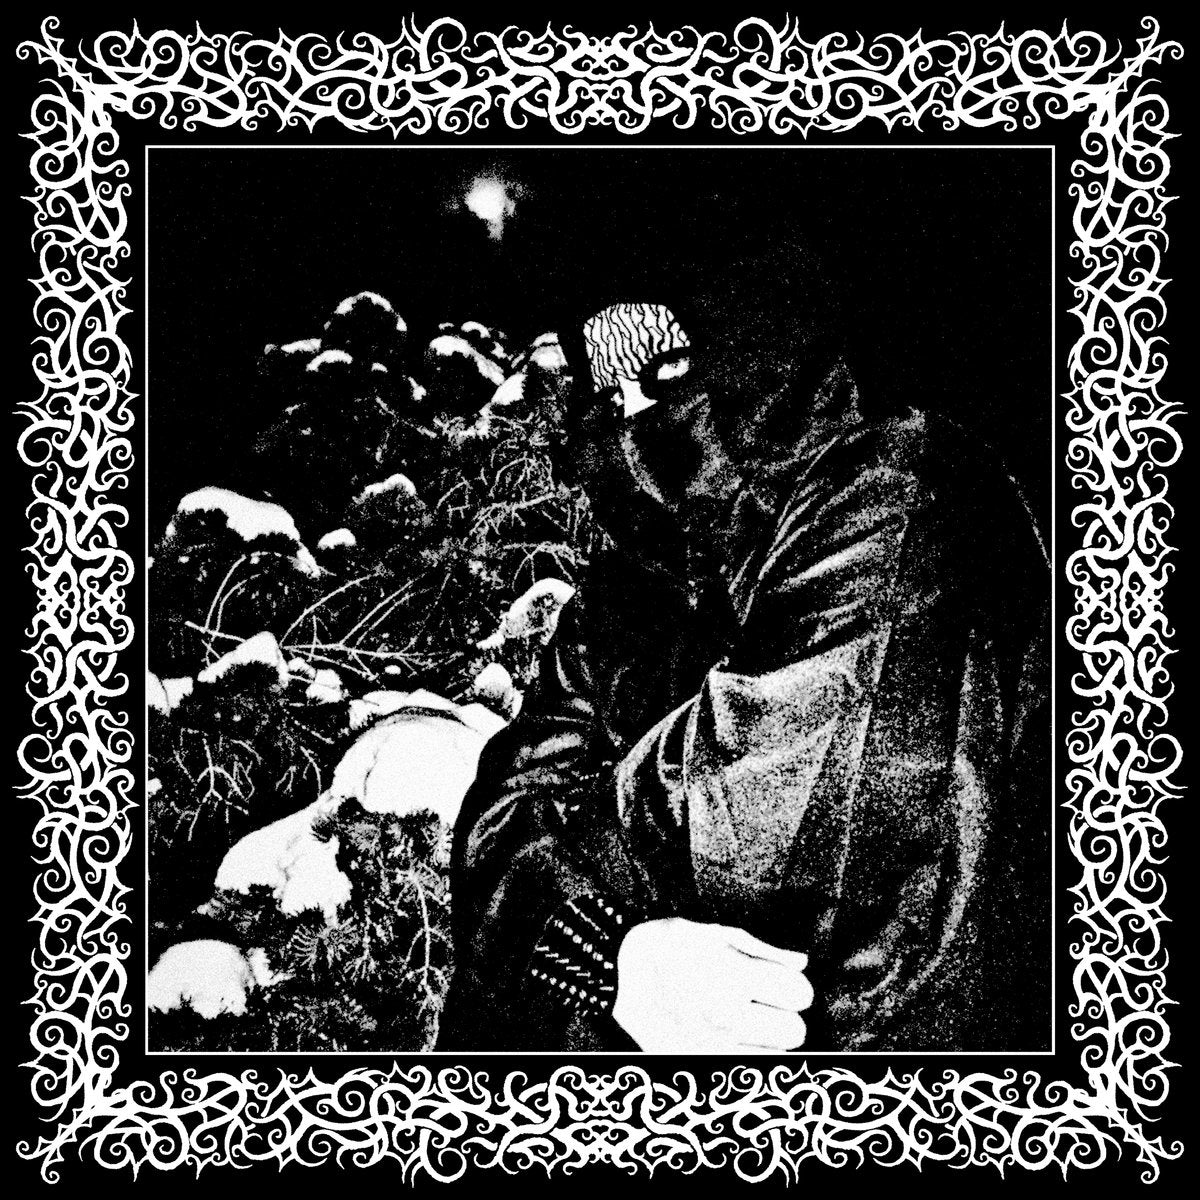 ARAZUBAK "The Haunted Spawn of Torment" CD [Digipak]